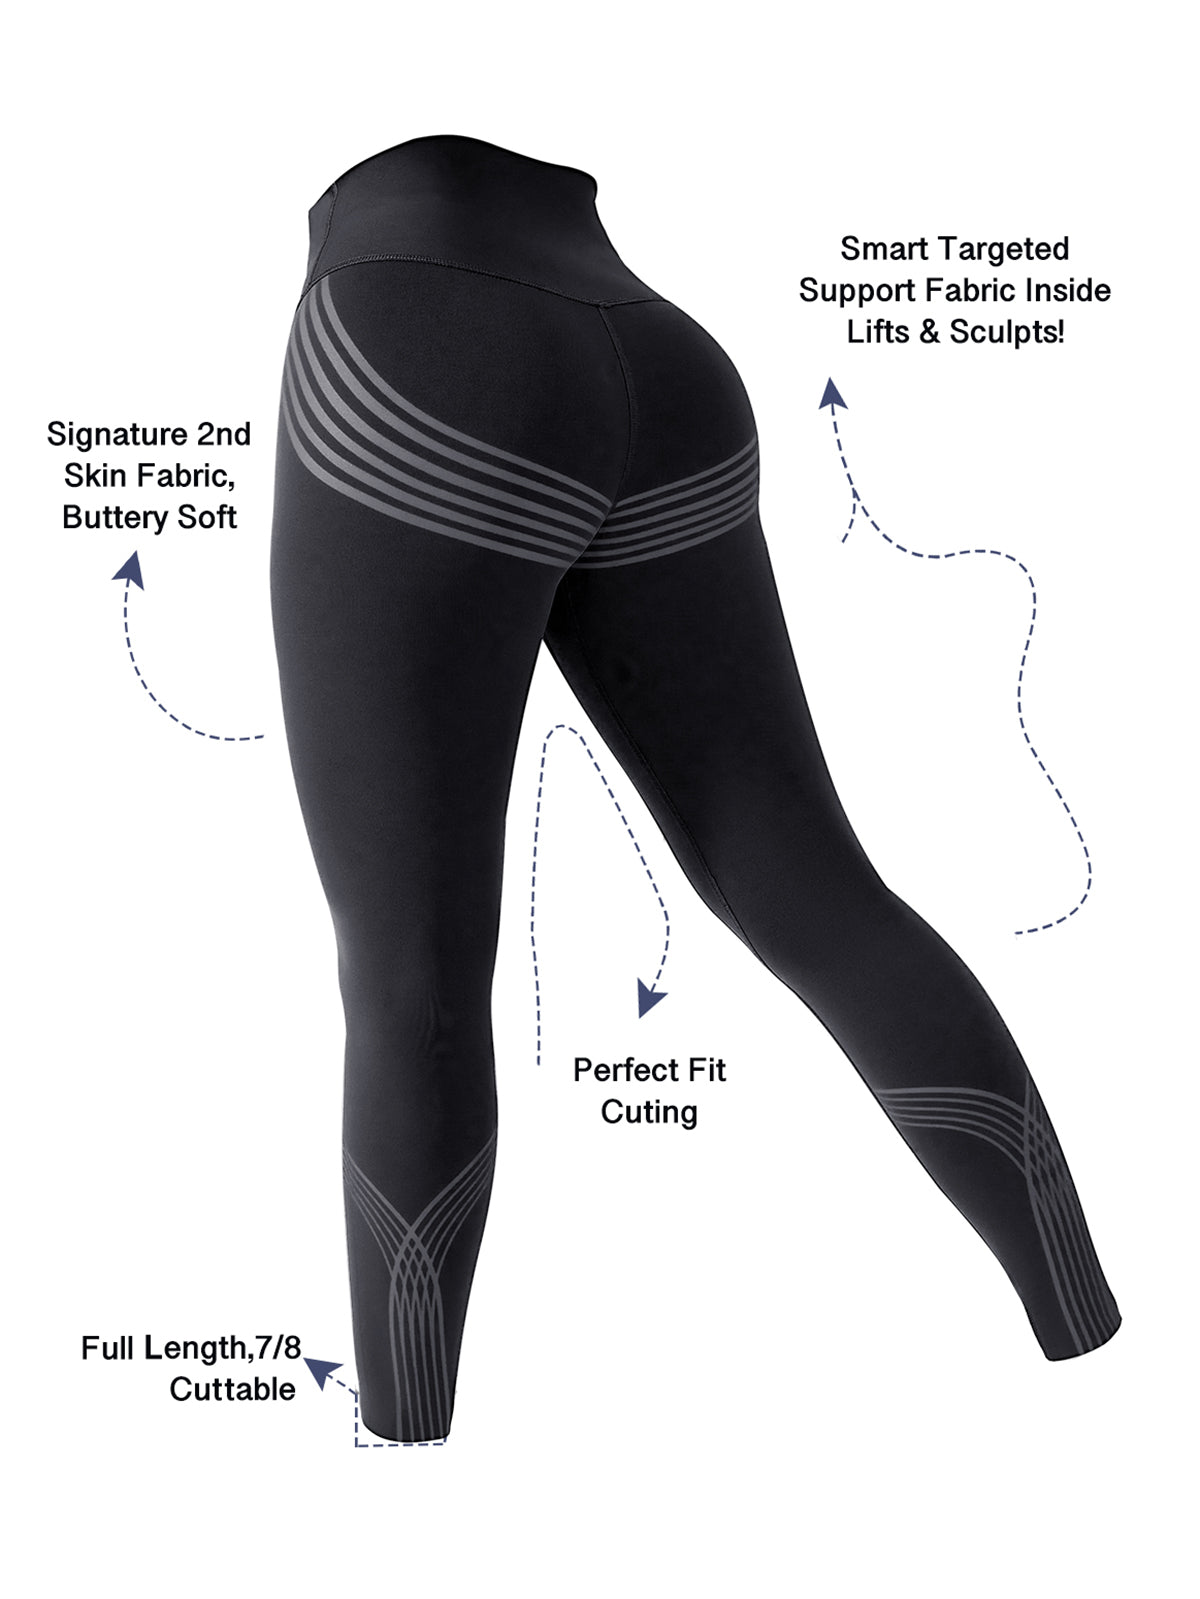 Targeted Support Legging Smart Length (Full or 7/8) skindocwife